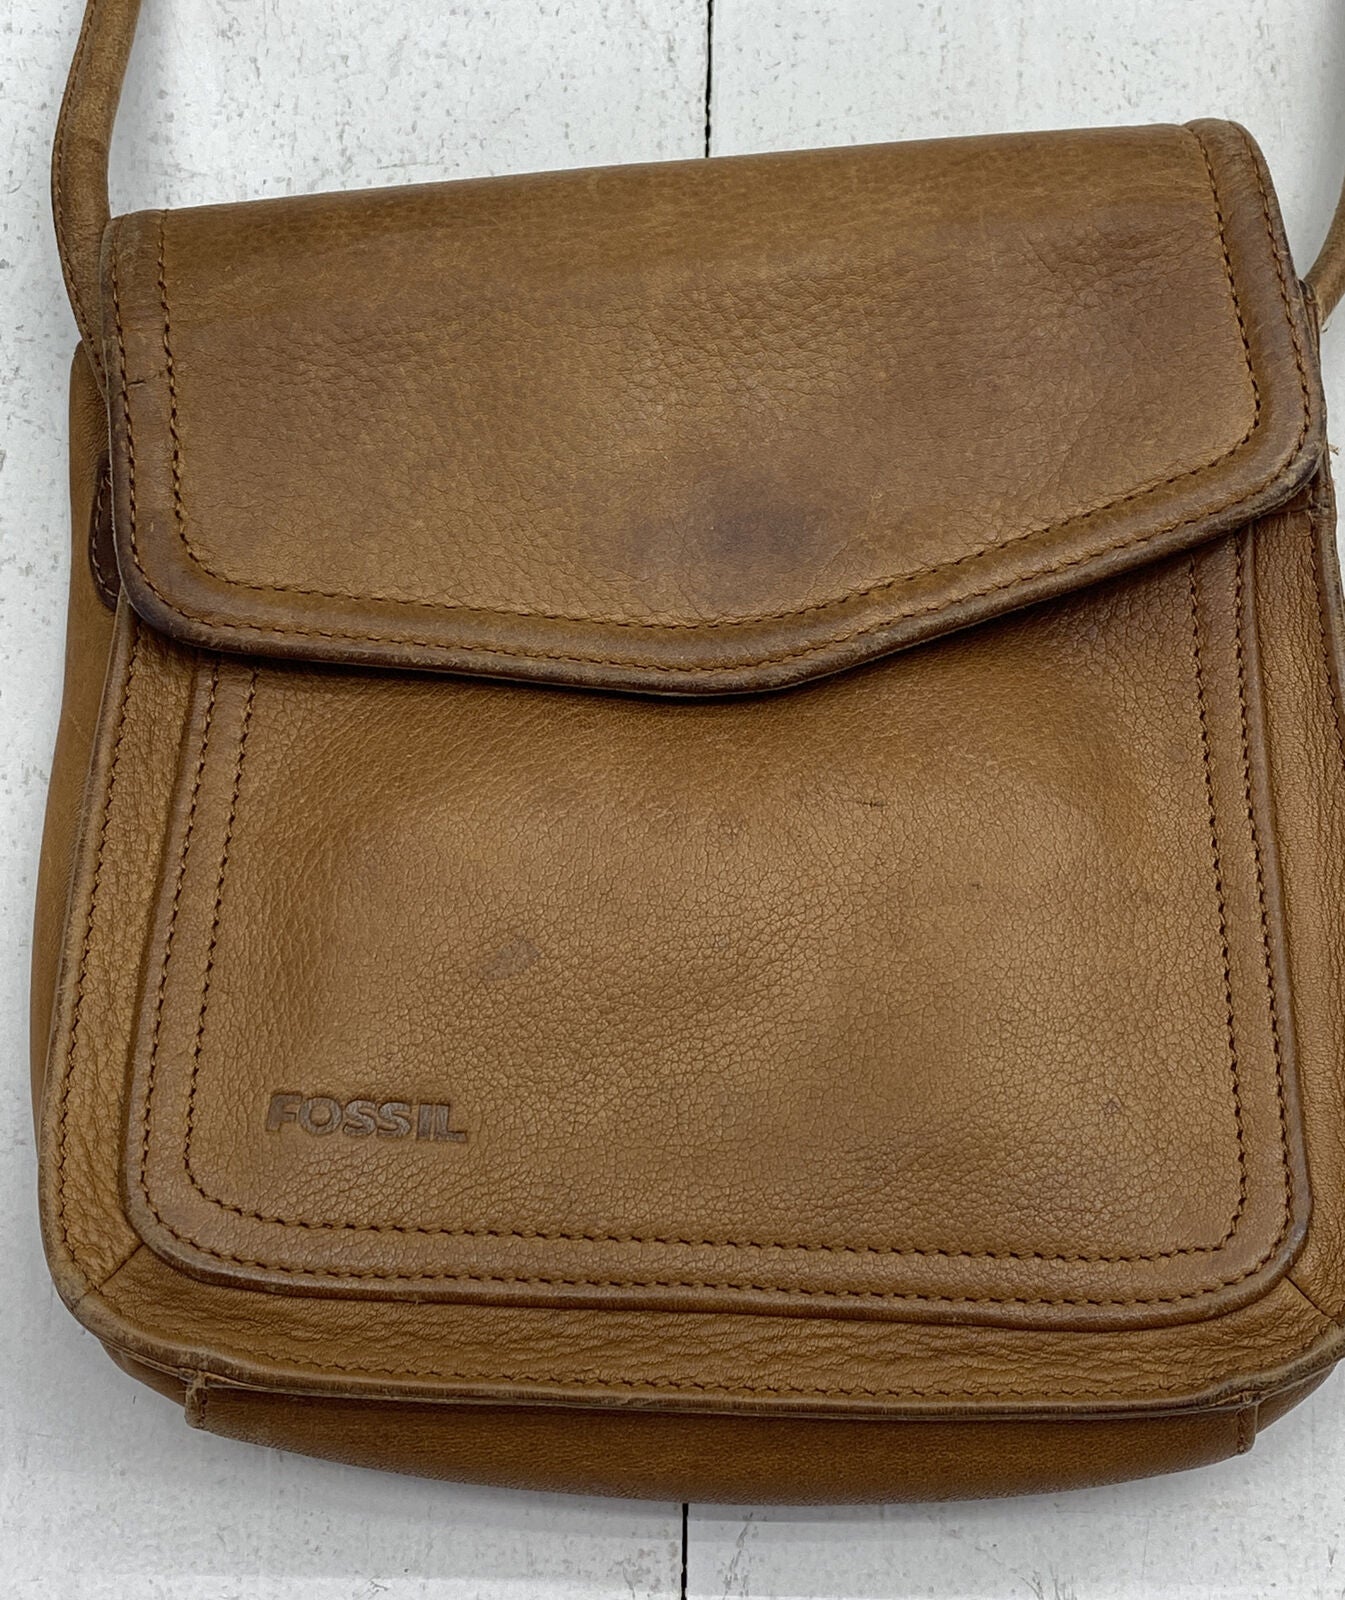 Fossil Purse Handbag Black Genuine Leather Black Key American Classic 75082  | eBay